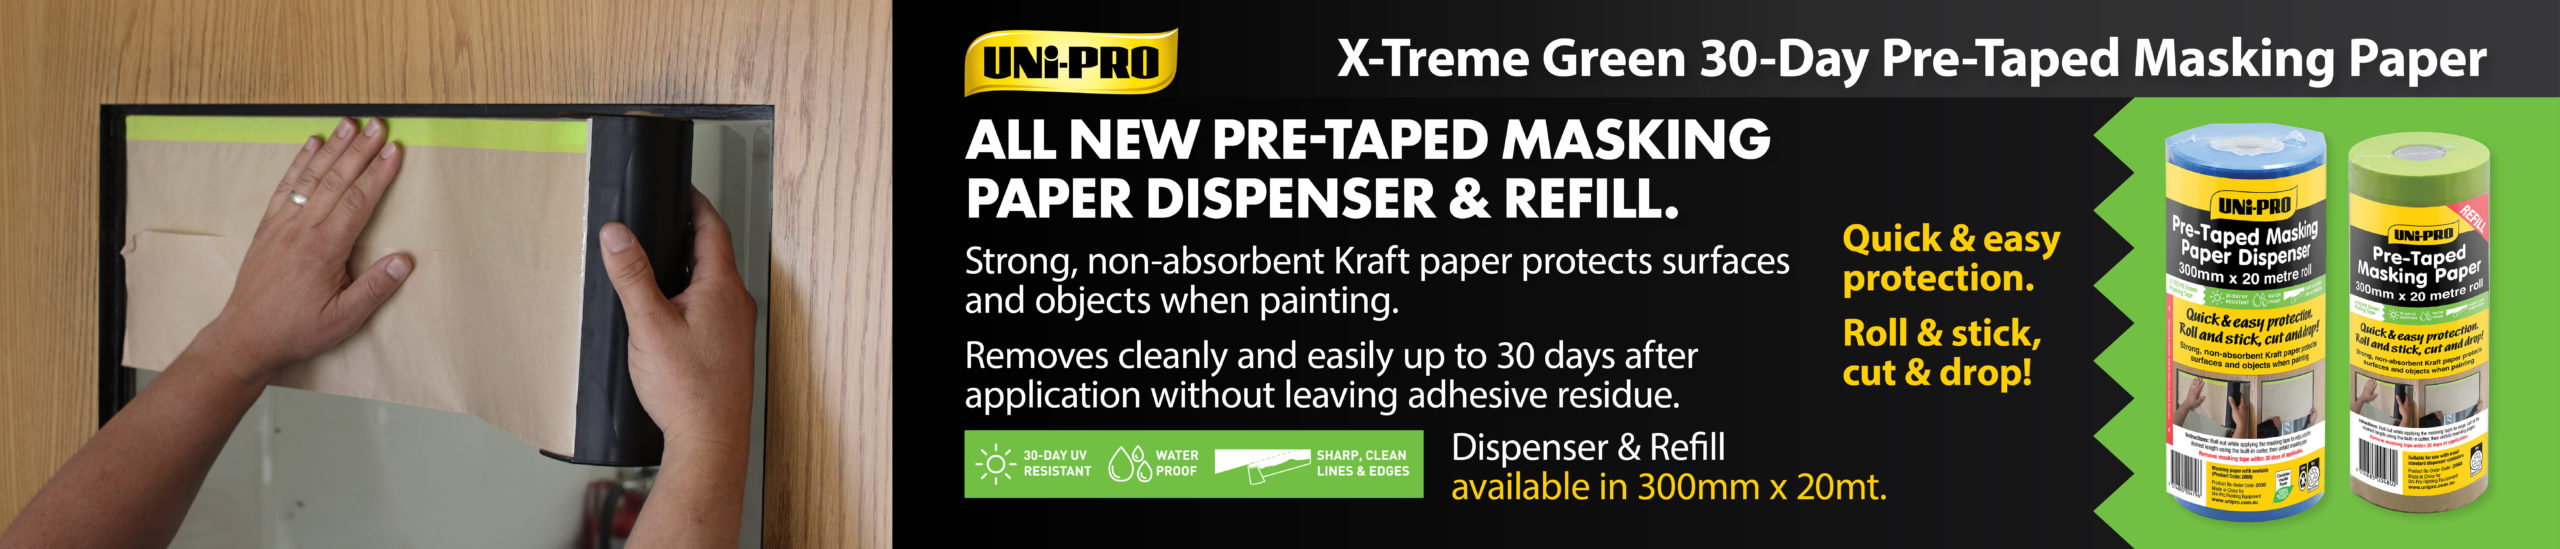 2800x600 Slider - Pre-Taped Masking Paper F21